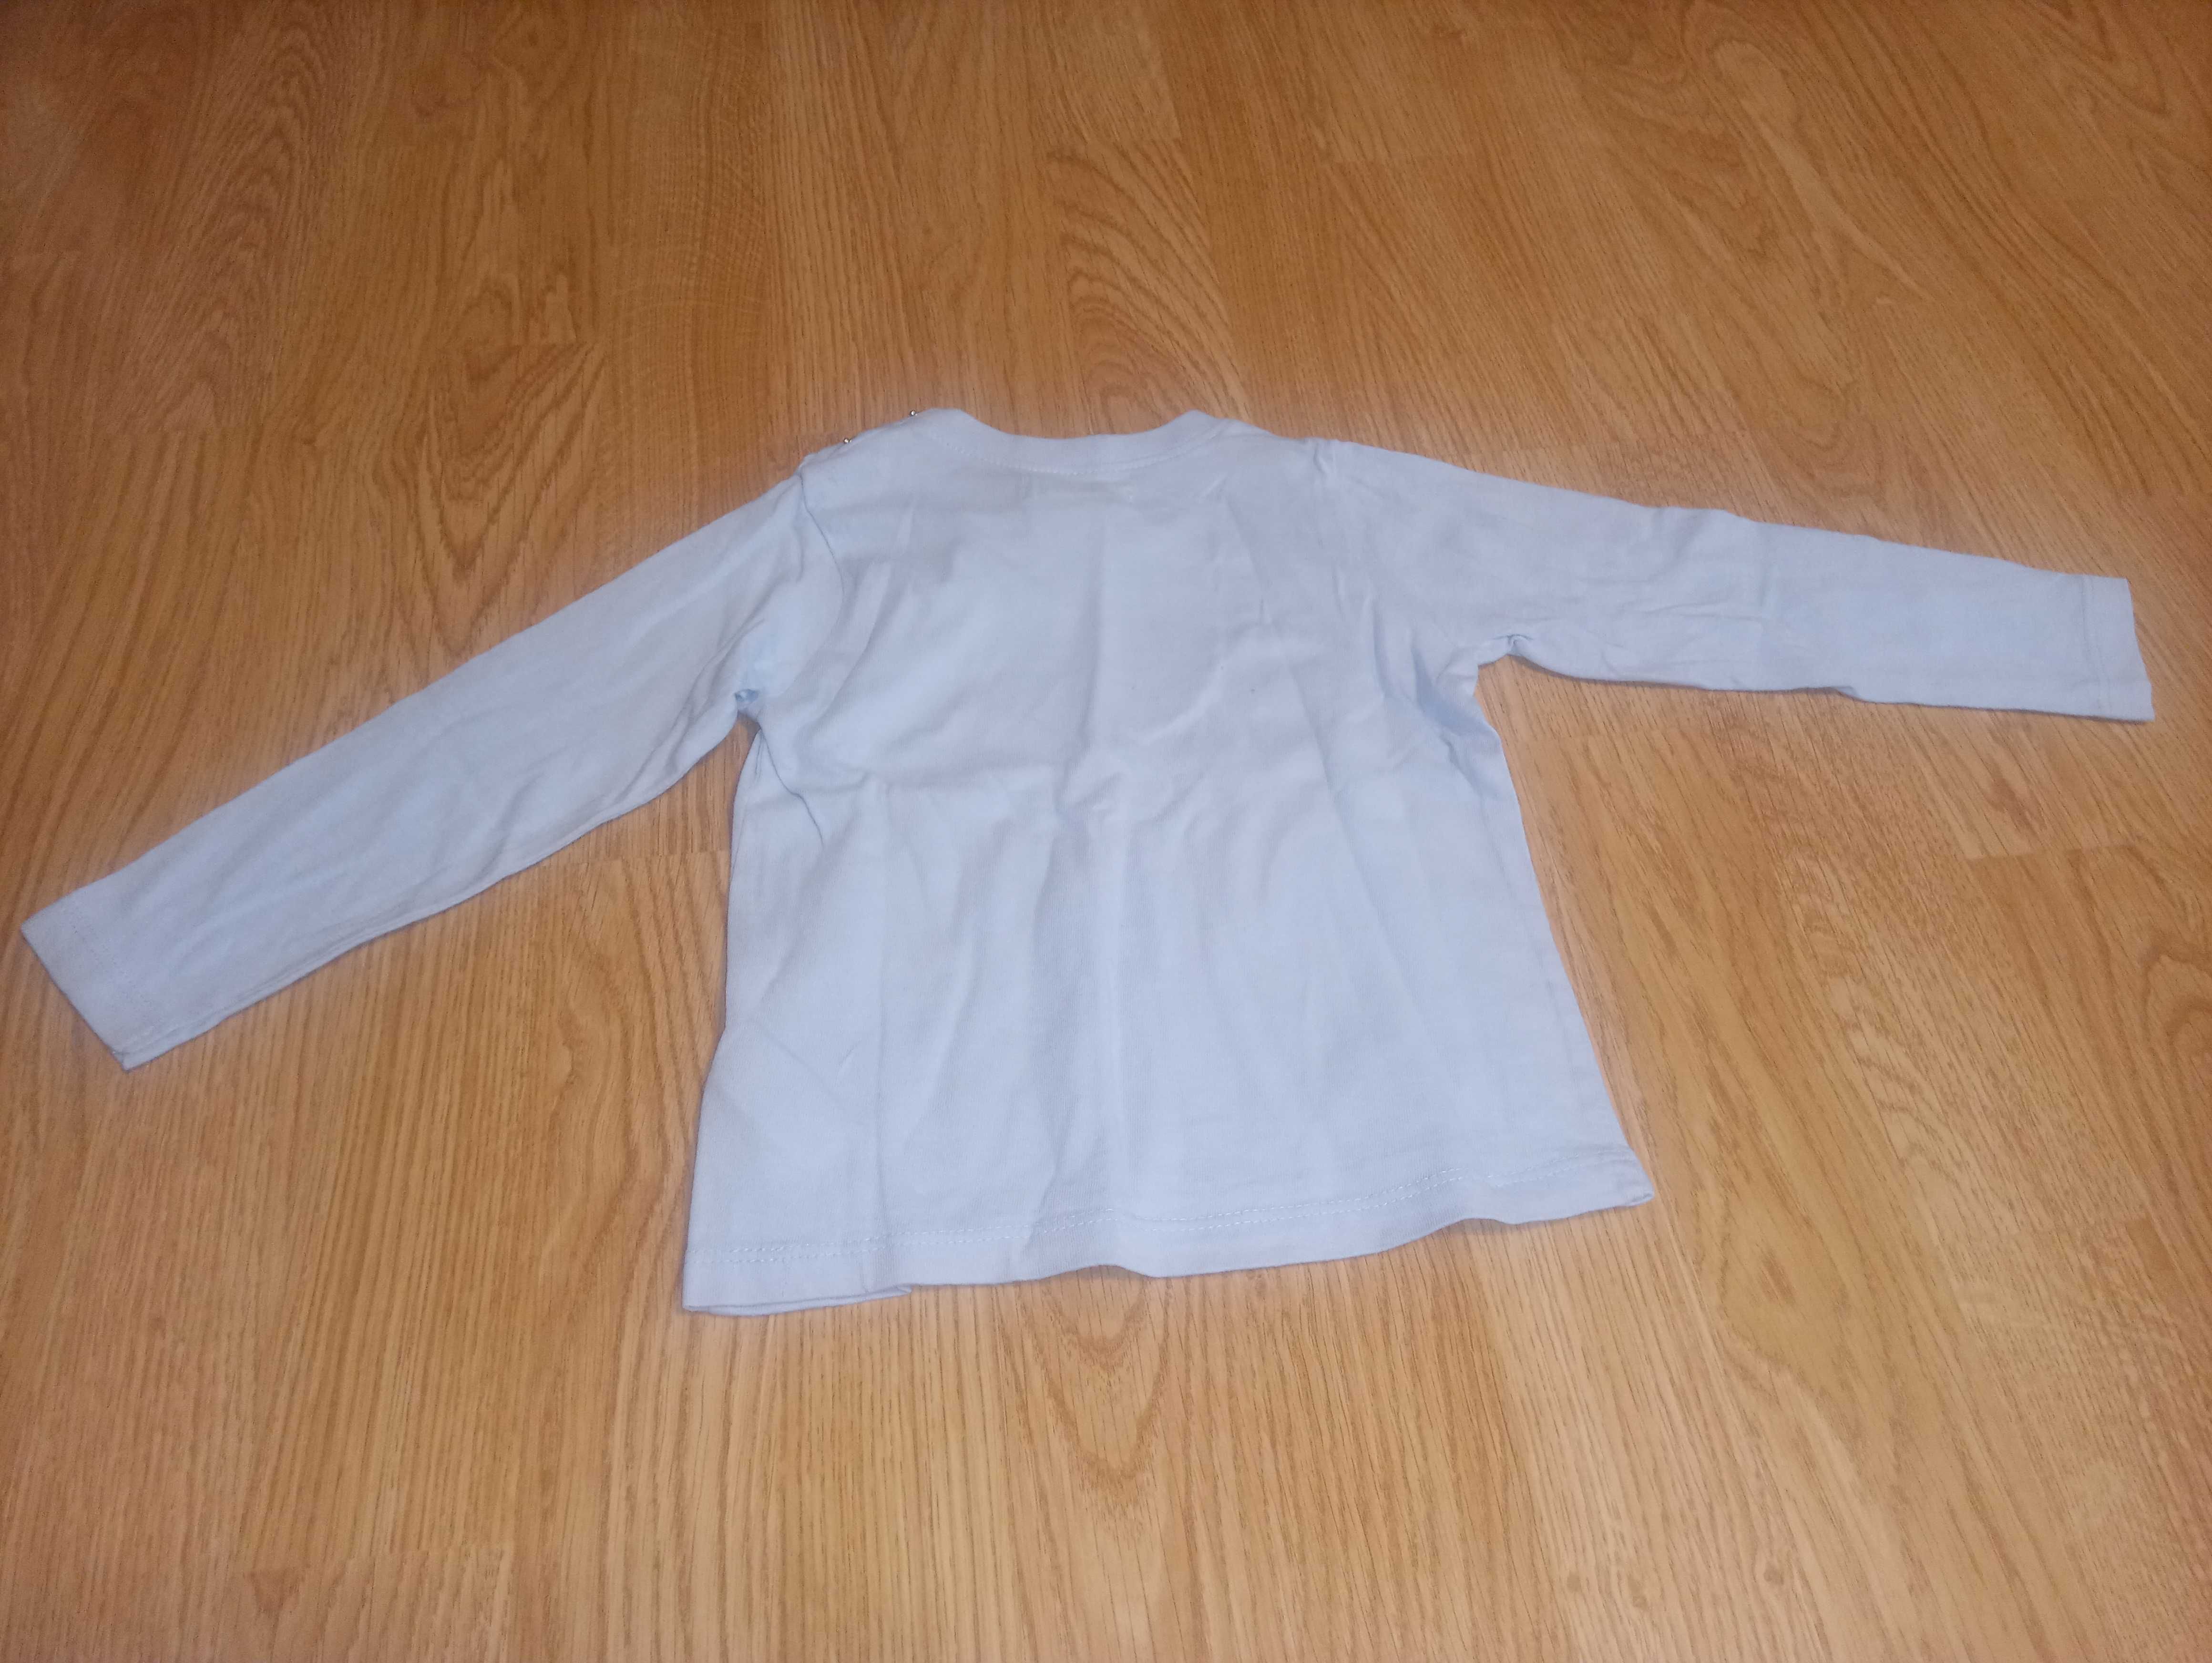 Koszulka z długim rękawem 86 cm, t shirt longsleeve z Kubusiem Puchatk